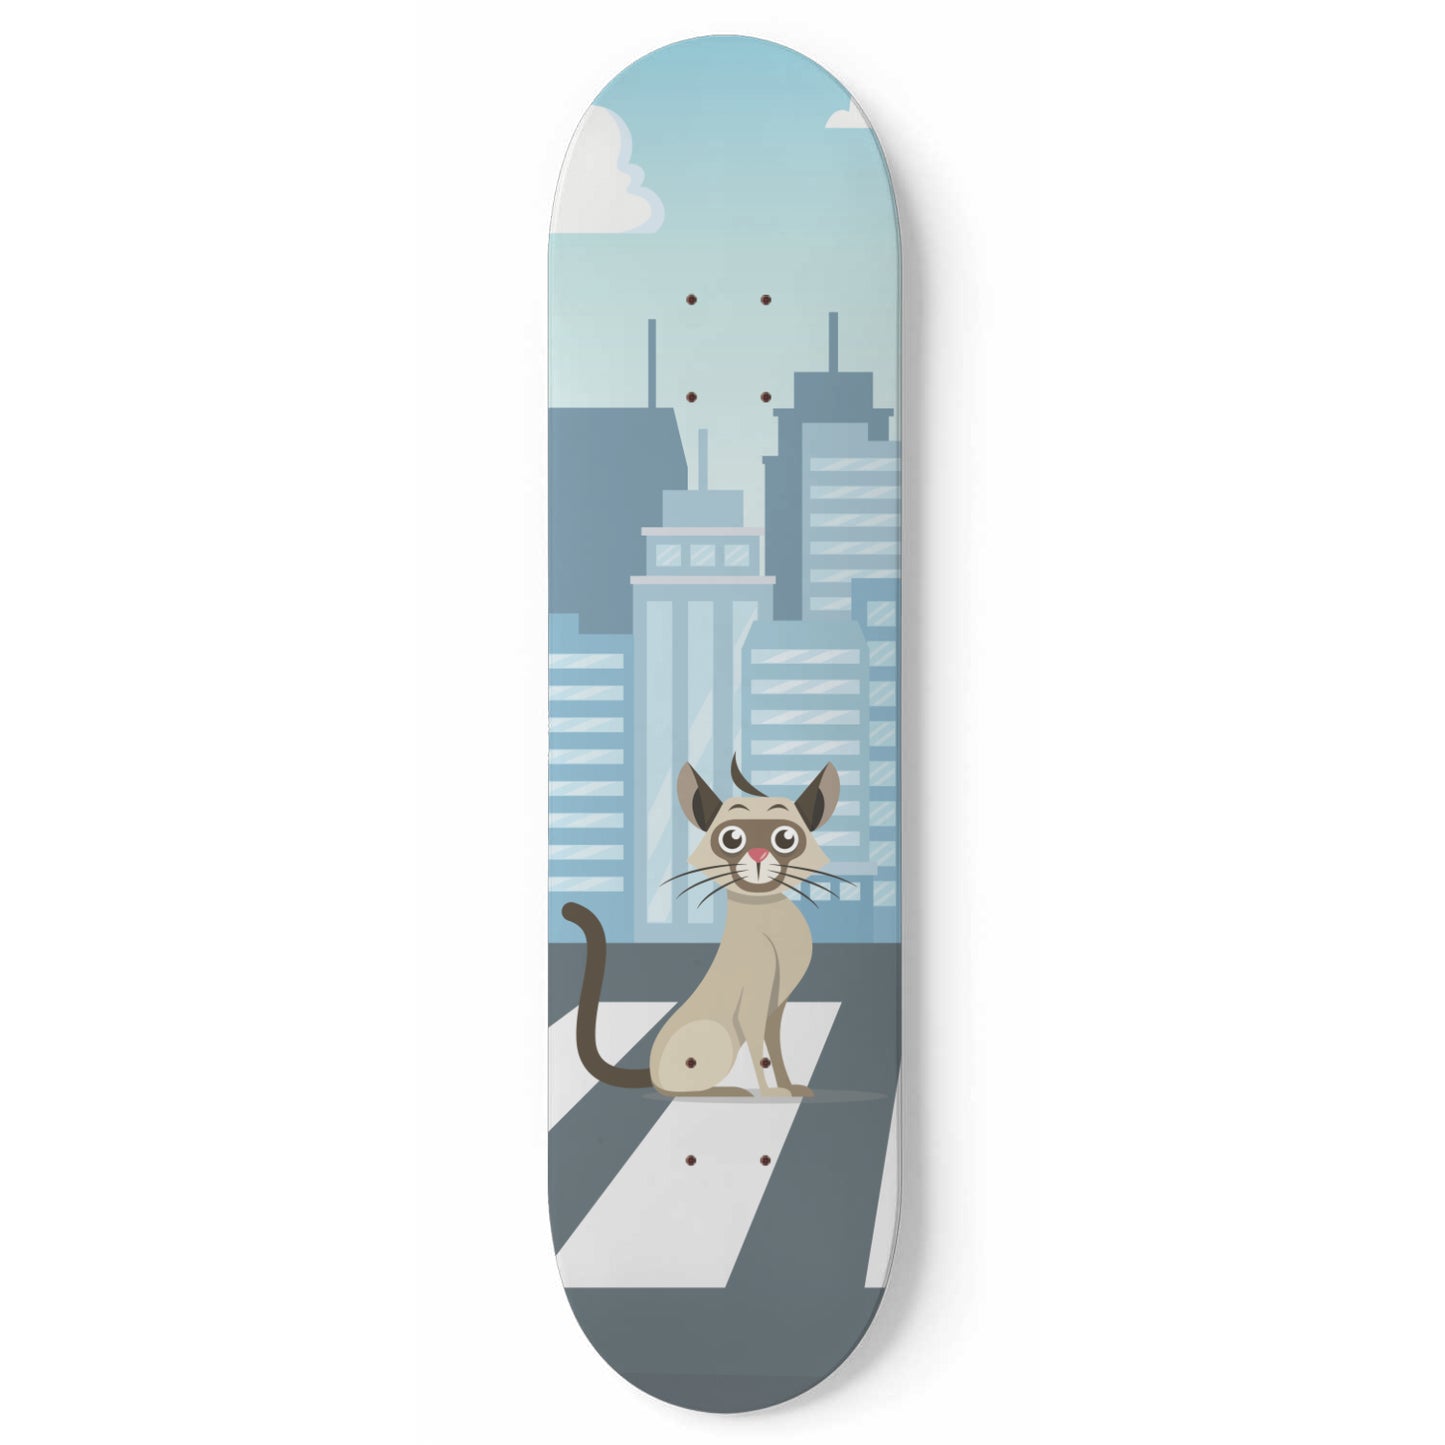 Adorable Cat Crossing New Horizon - Skateboard Wall Art